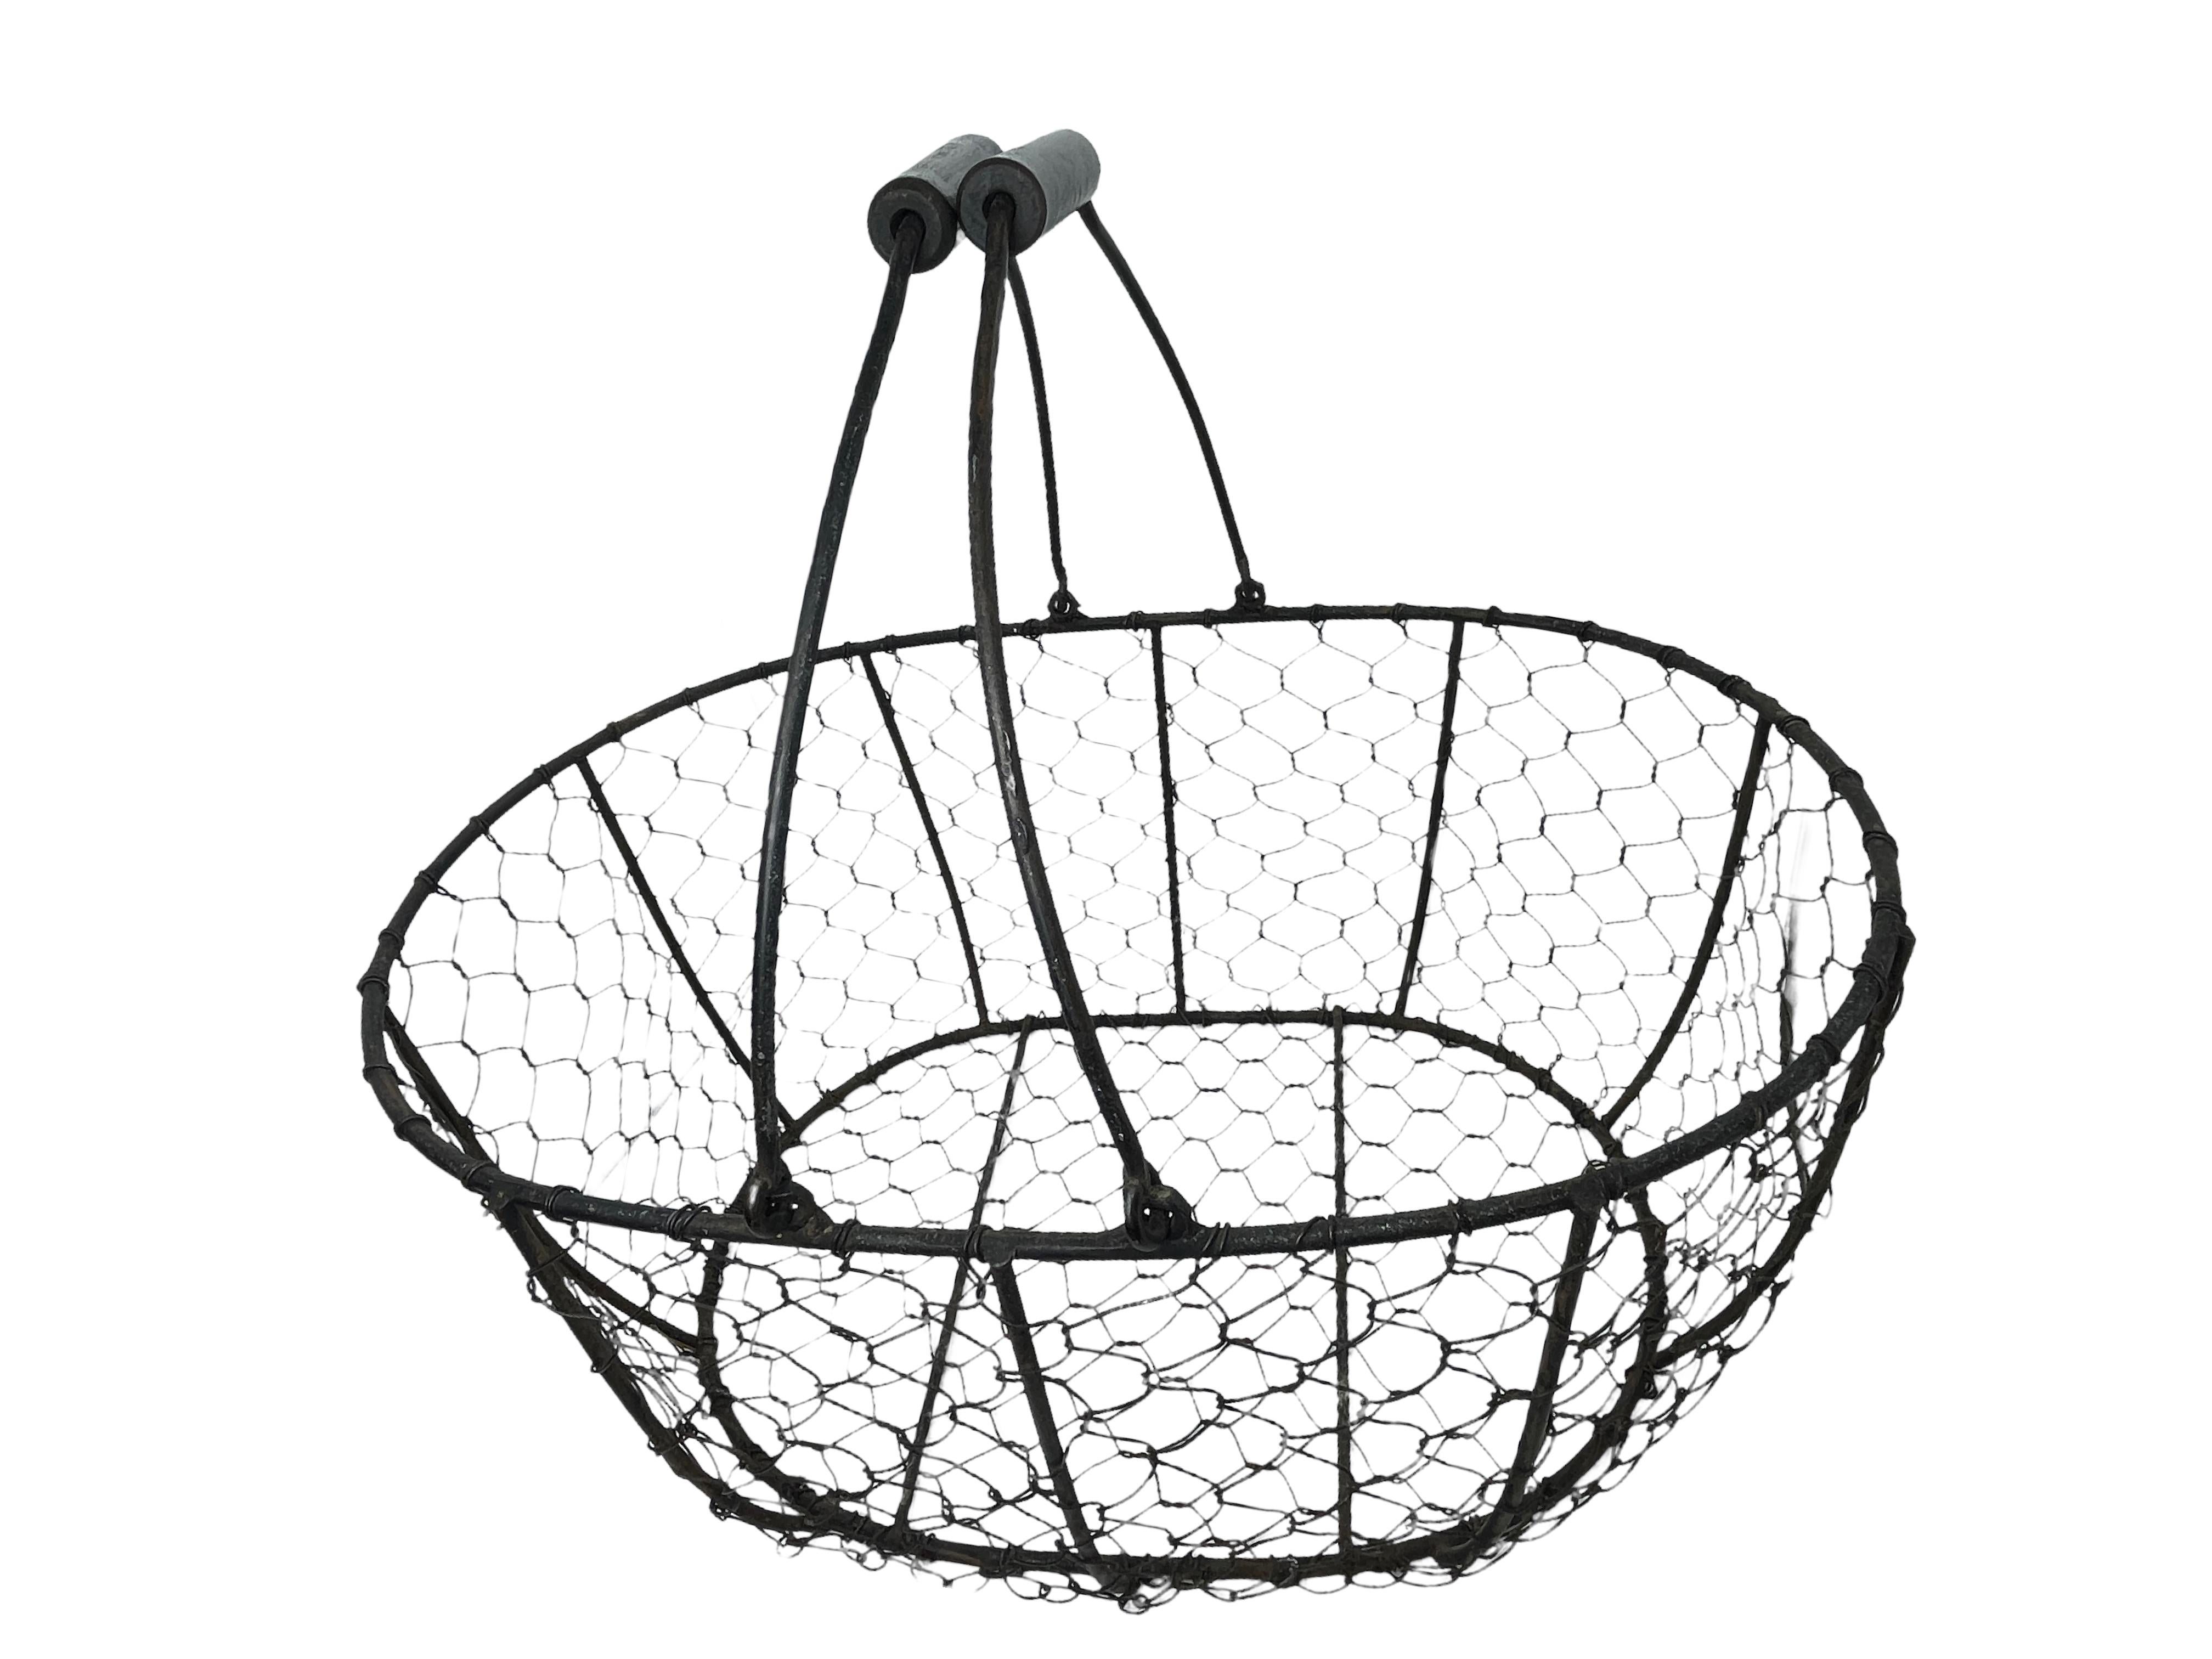 Folk Art Farmhouse Chicken Wire Egg Basket Carry All, Vintage Industrial Austria For Sale